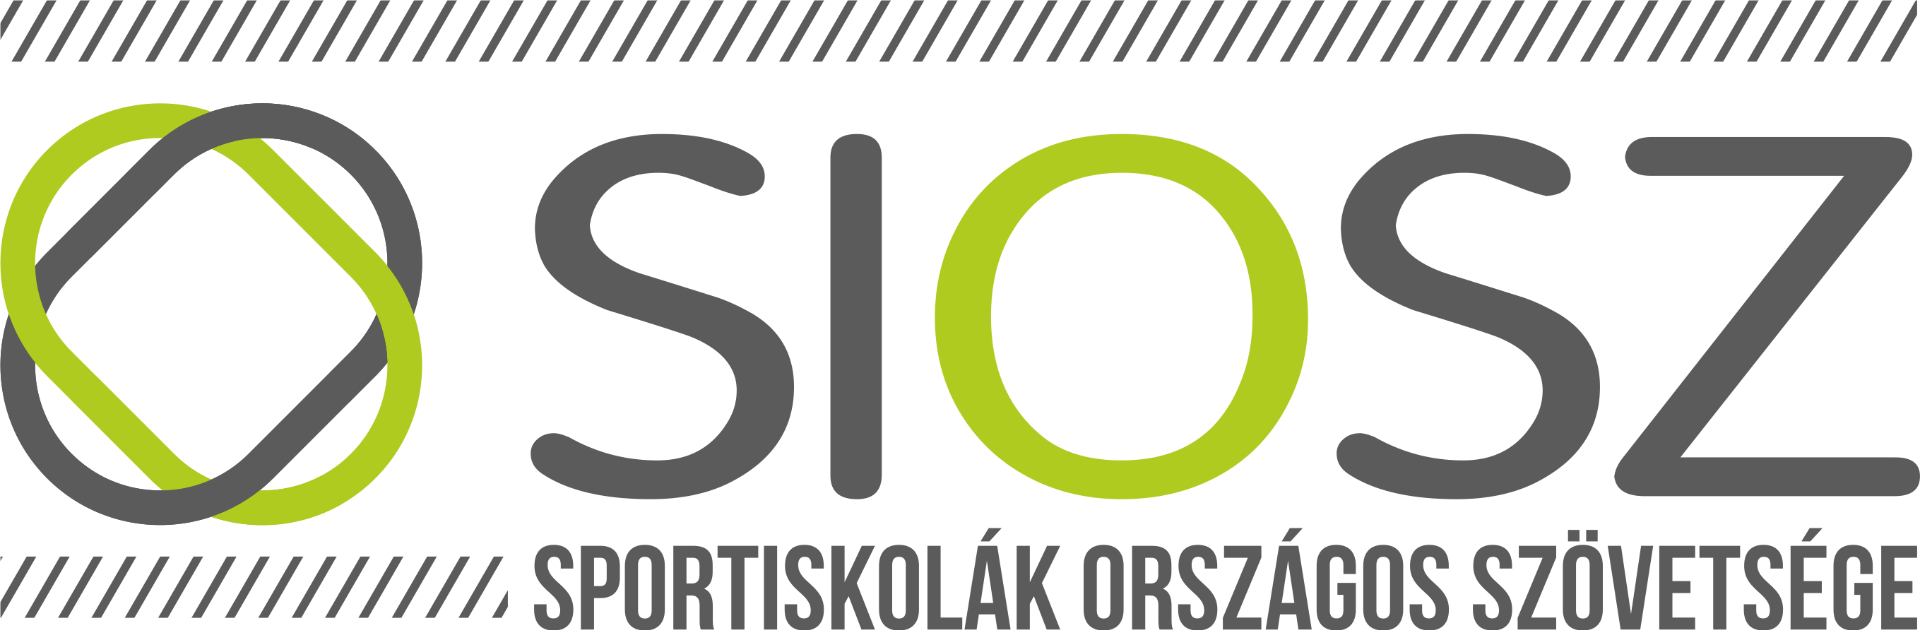 siosz logo